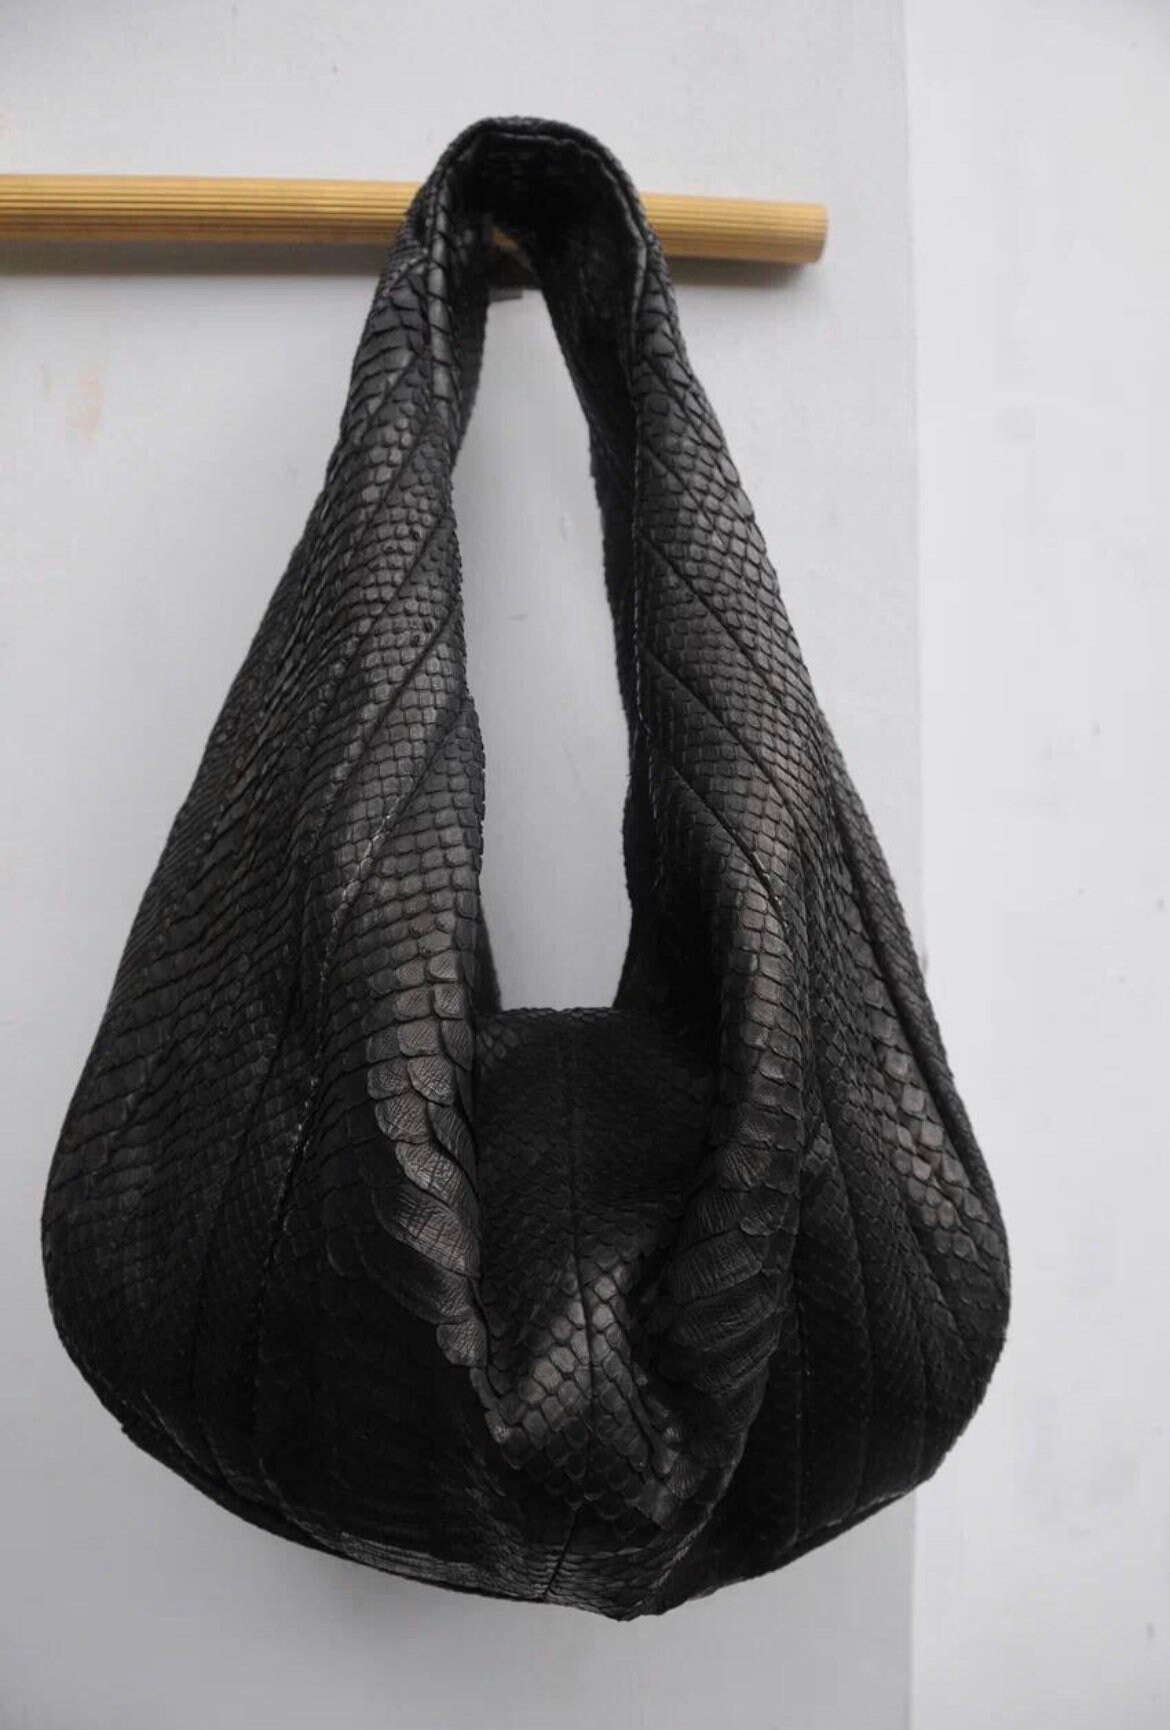 EPONYMOUS Bag Purse Leather Clutch Python Luxury Logo Black Boho Green  $1,495